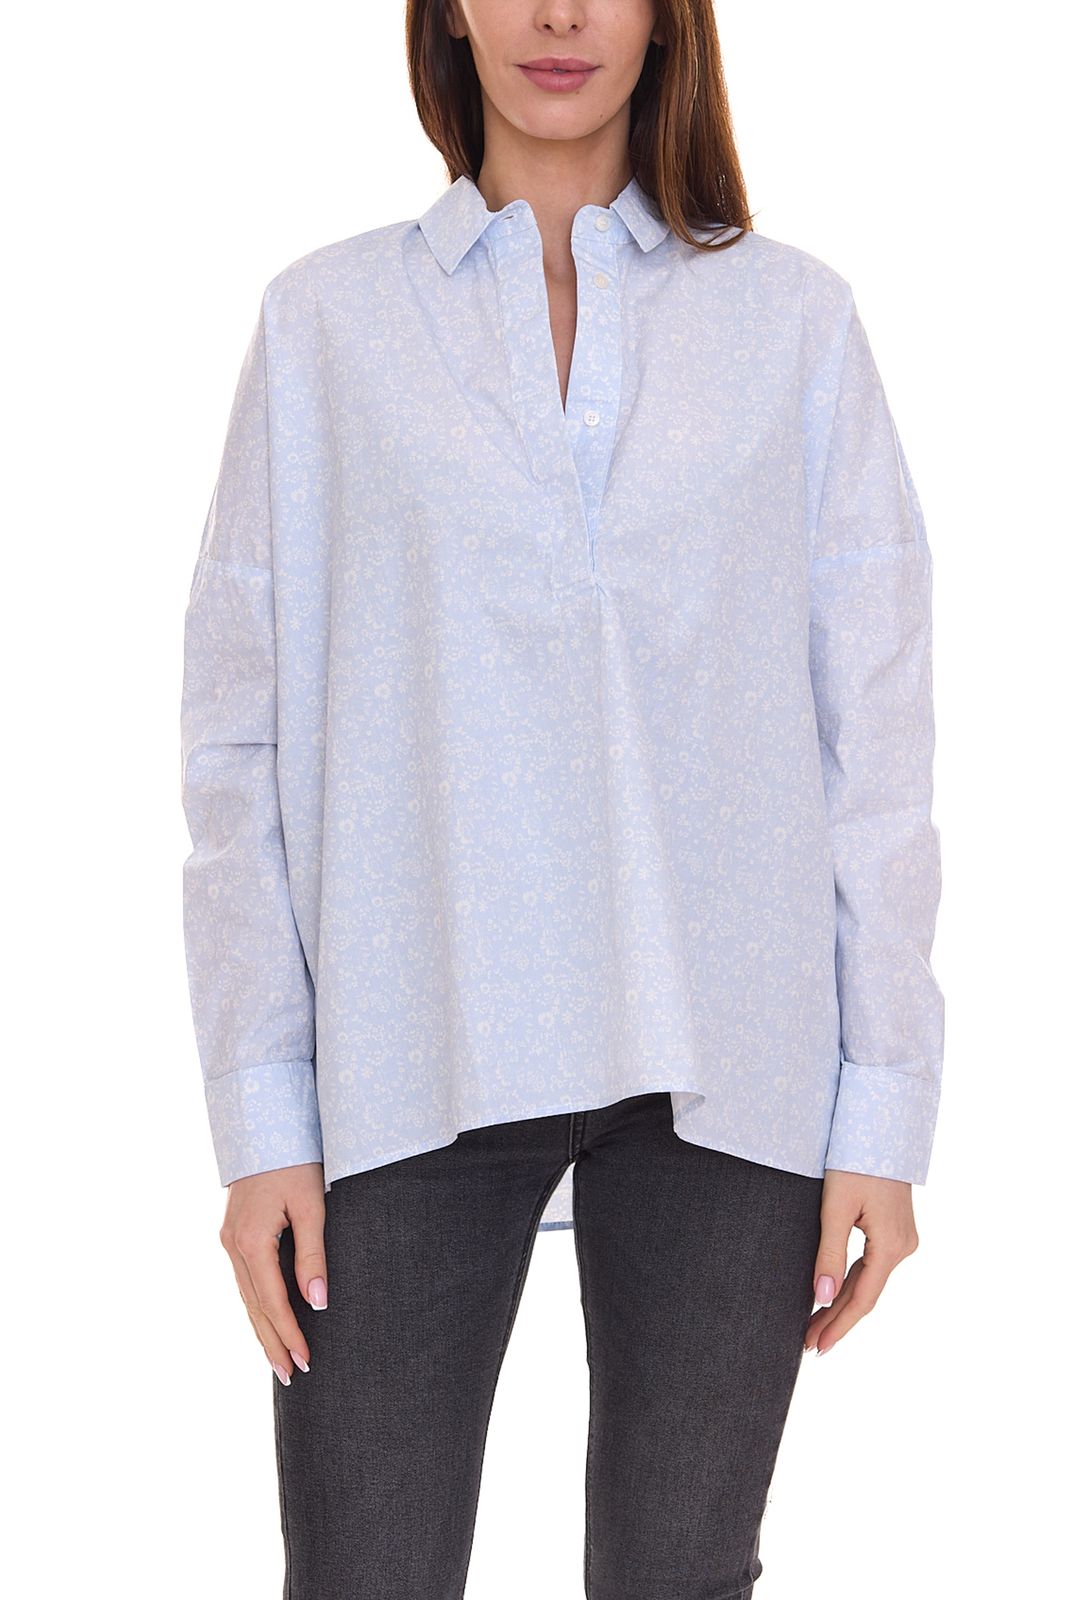 LTB Jamodi Damen Hemd-Bluse mit Floralem Allover-Print Baumwoll-Hemd 69745902 Blau von LTB